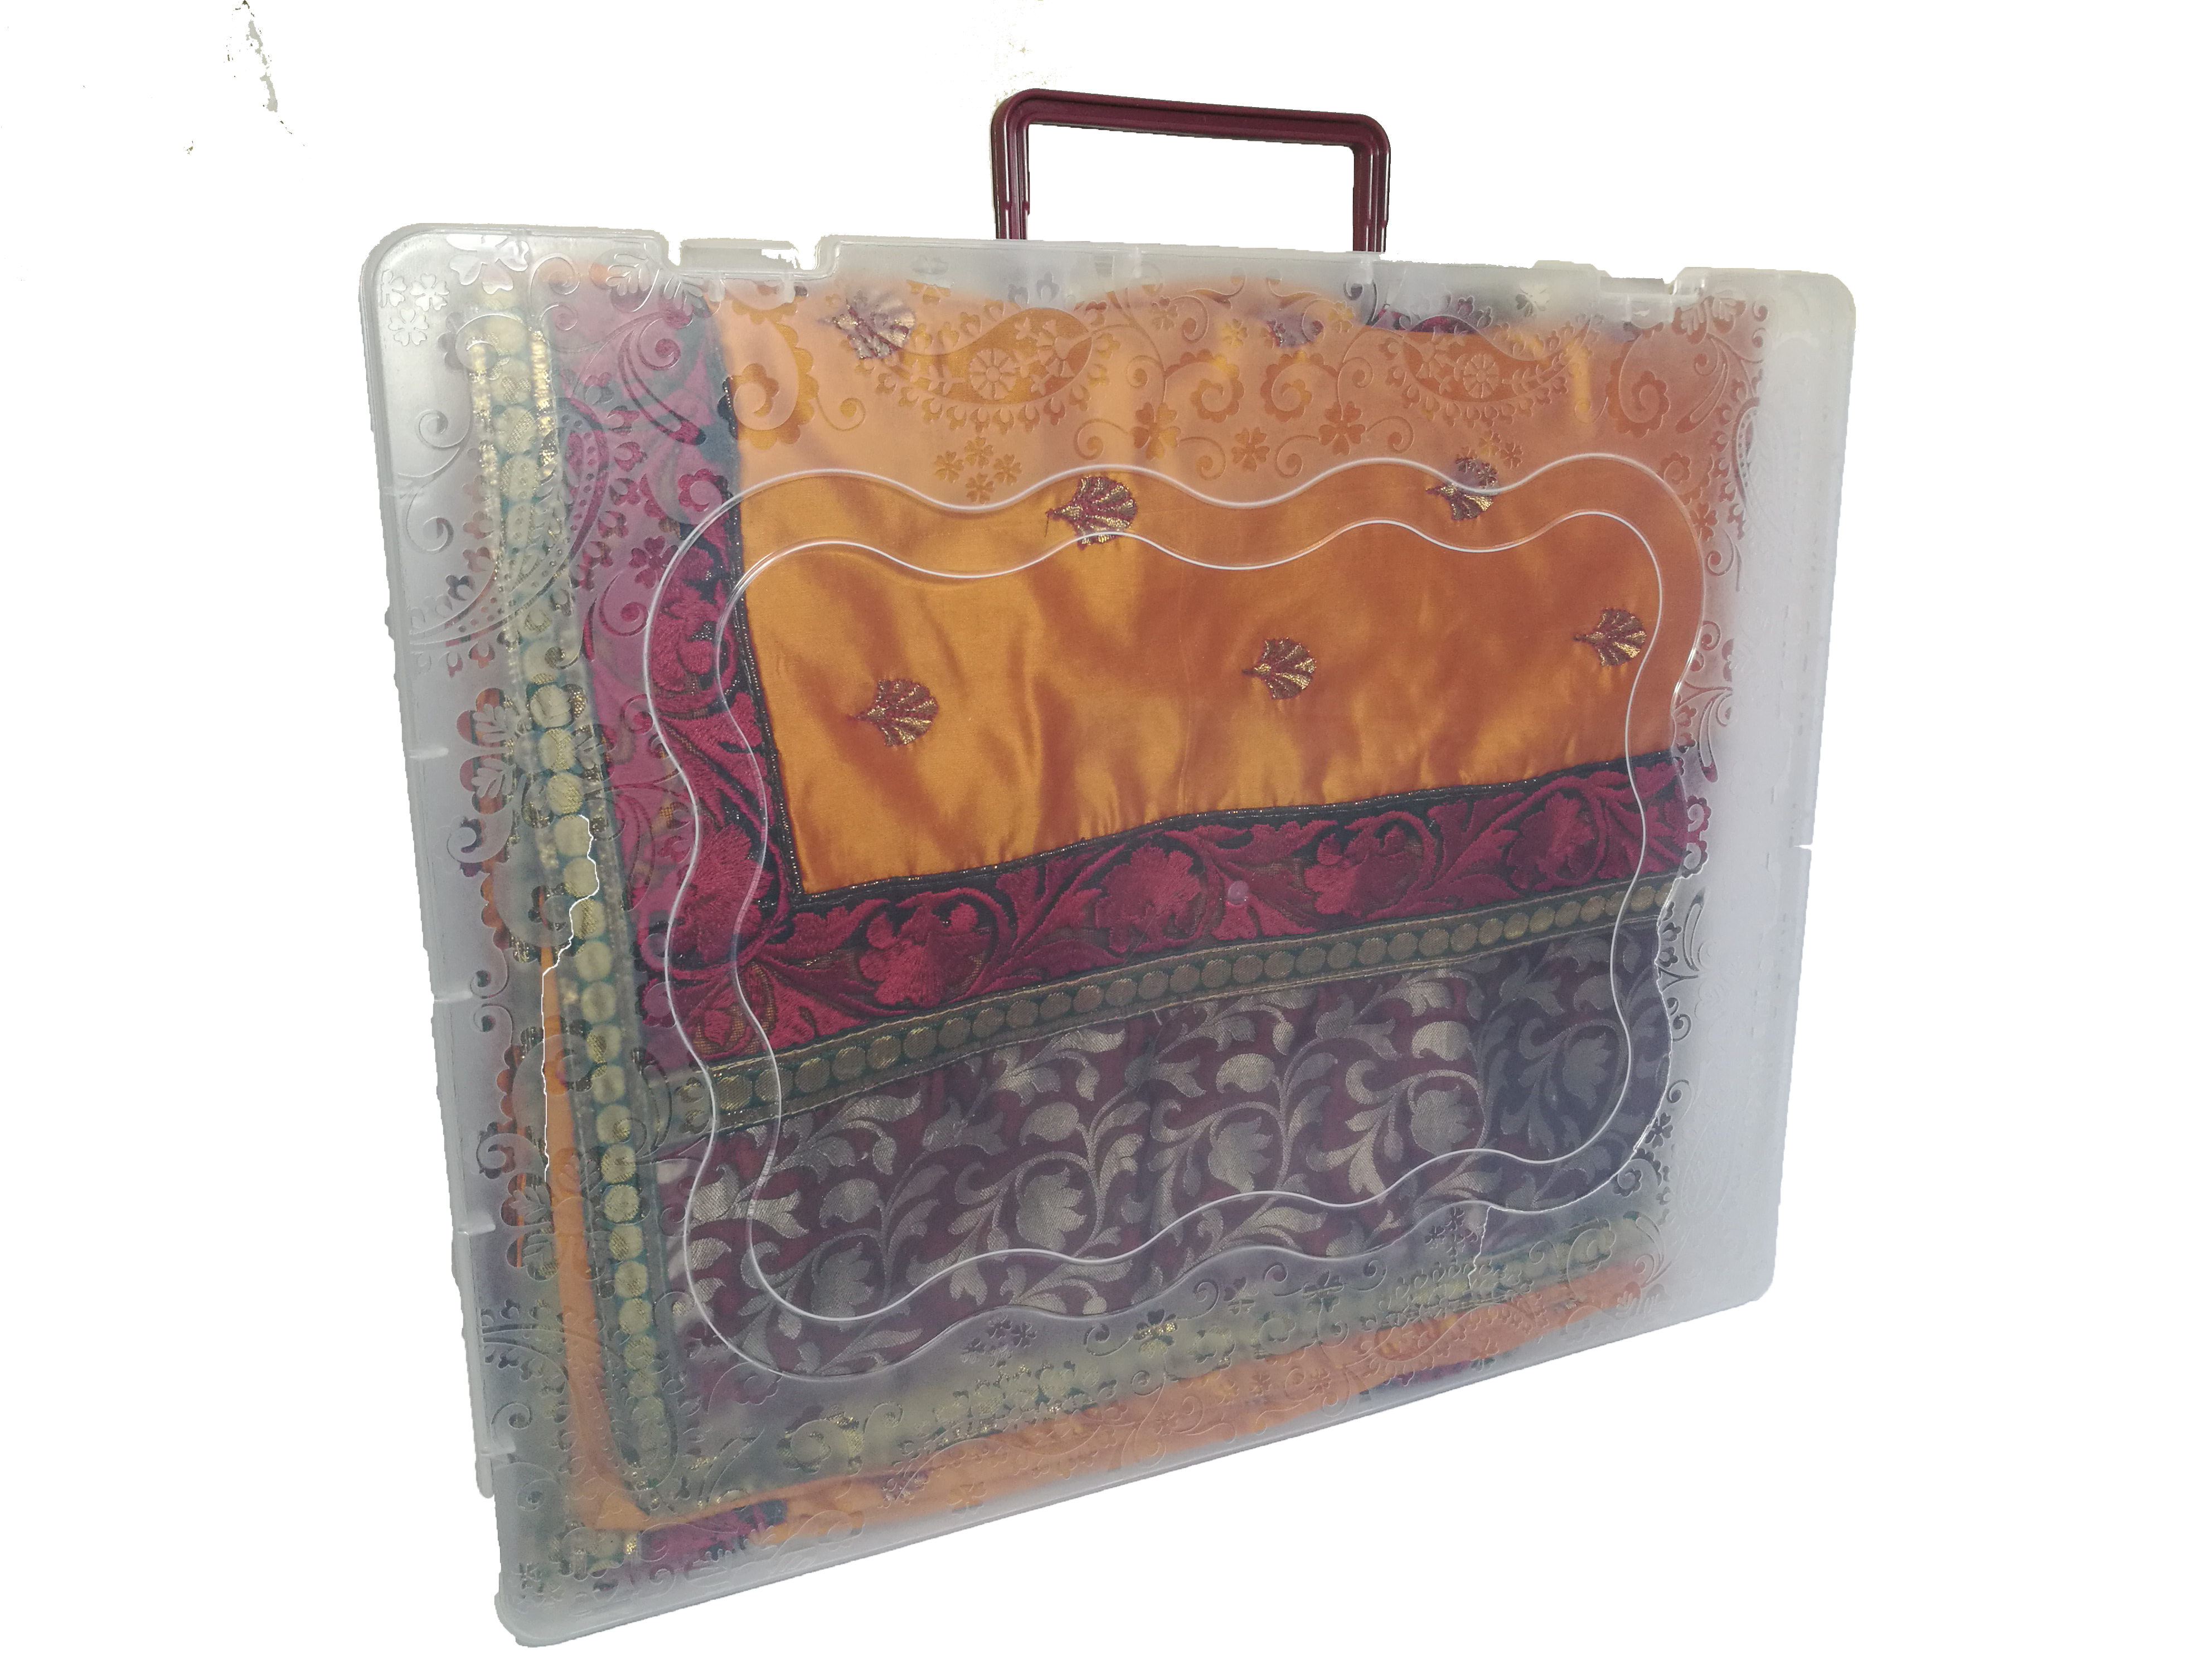 Saree Packing Plastic Box